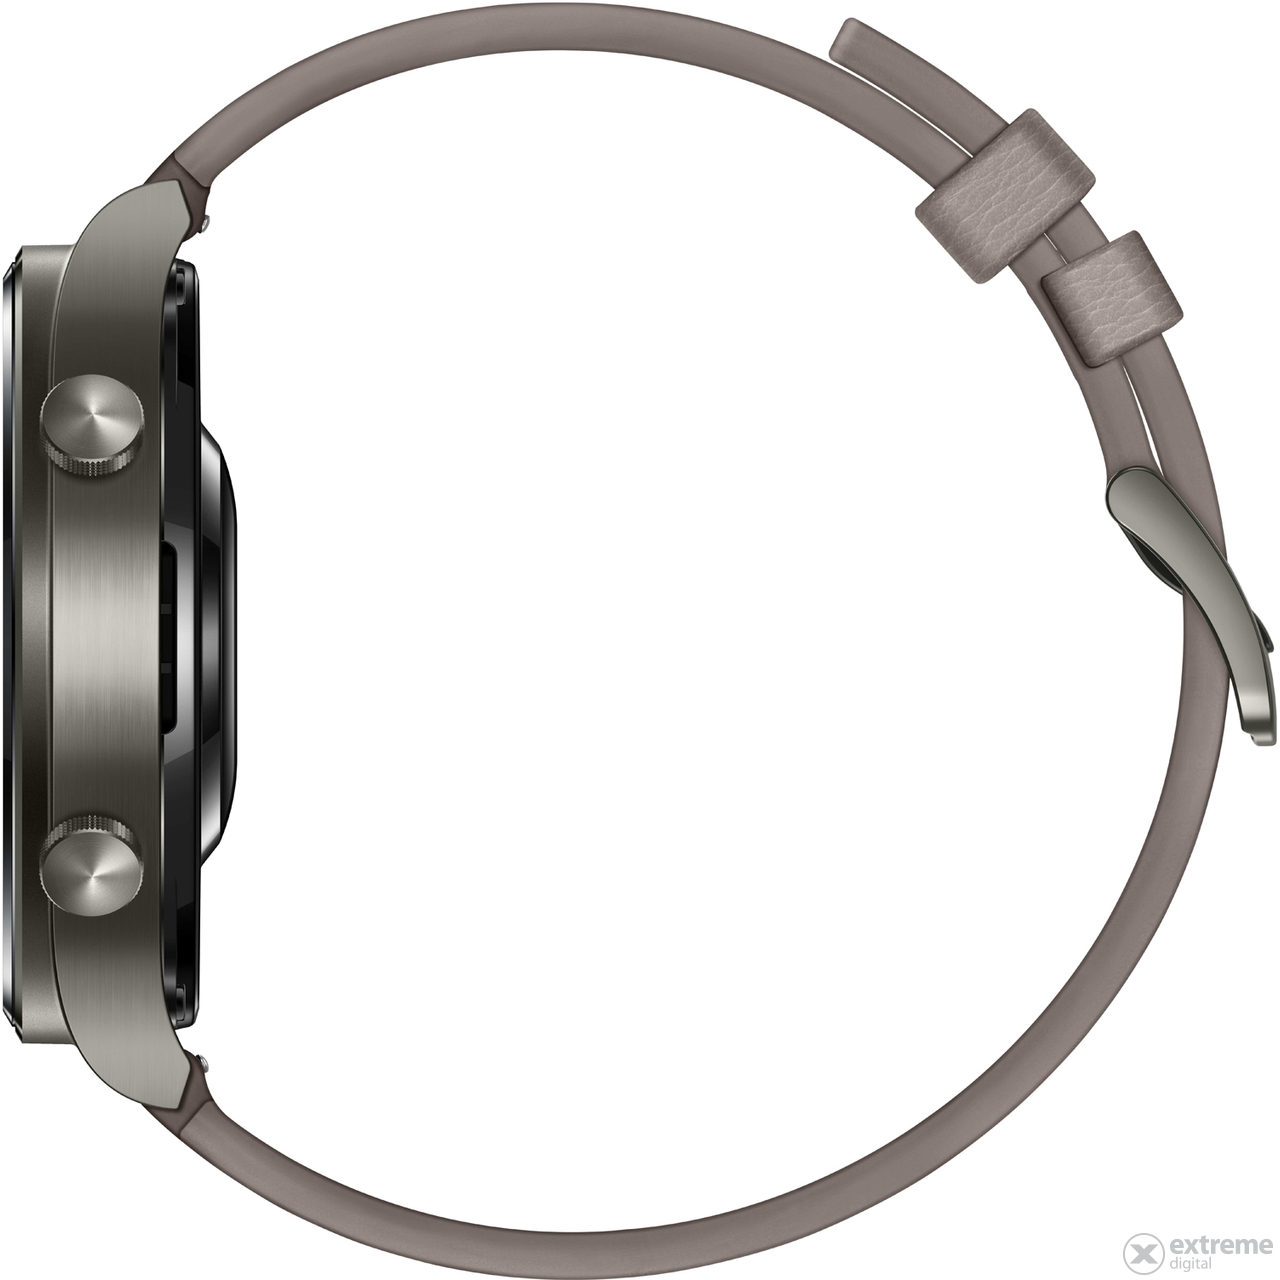 Часовник Huawei Watch GT 2 Pro, Nebula Grey